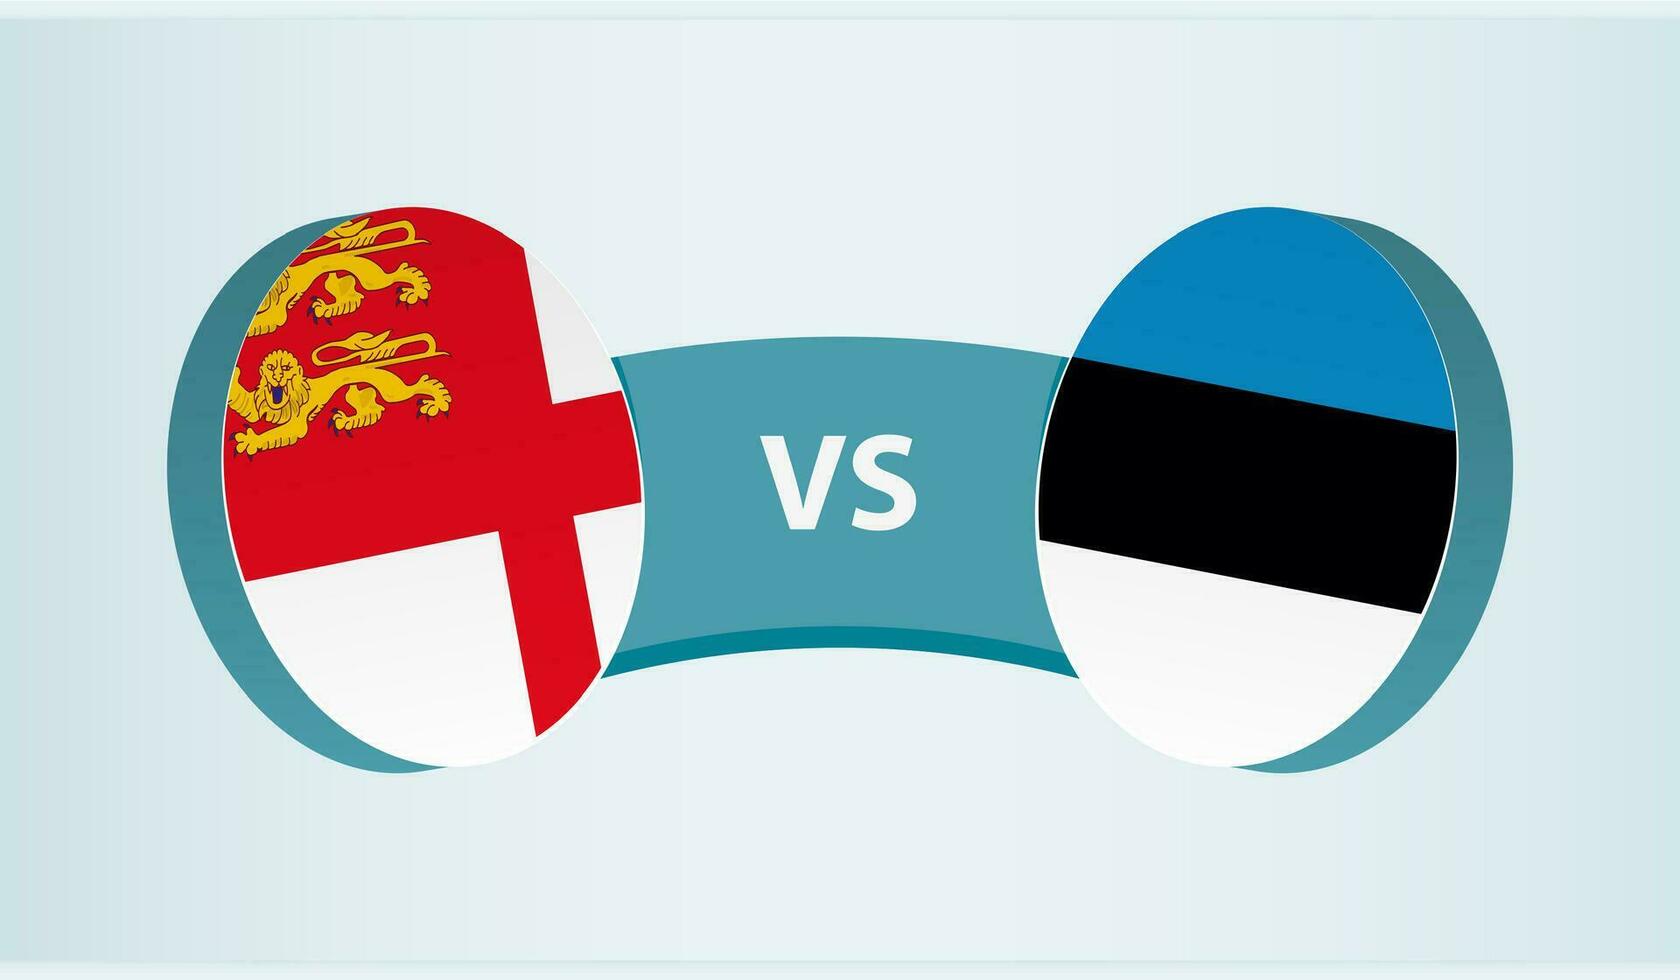 Sark versus Estonia, team sports competition concept. vector